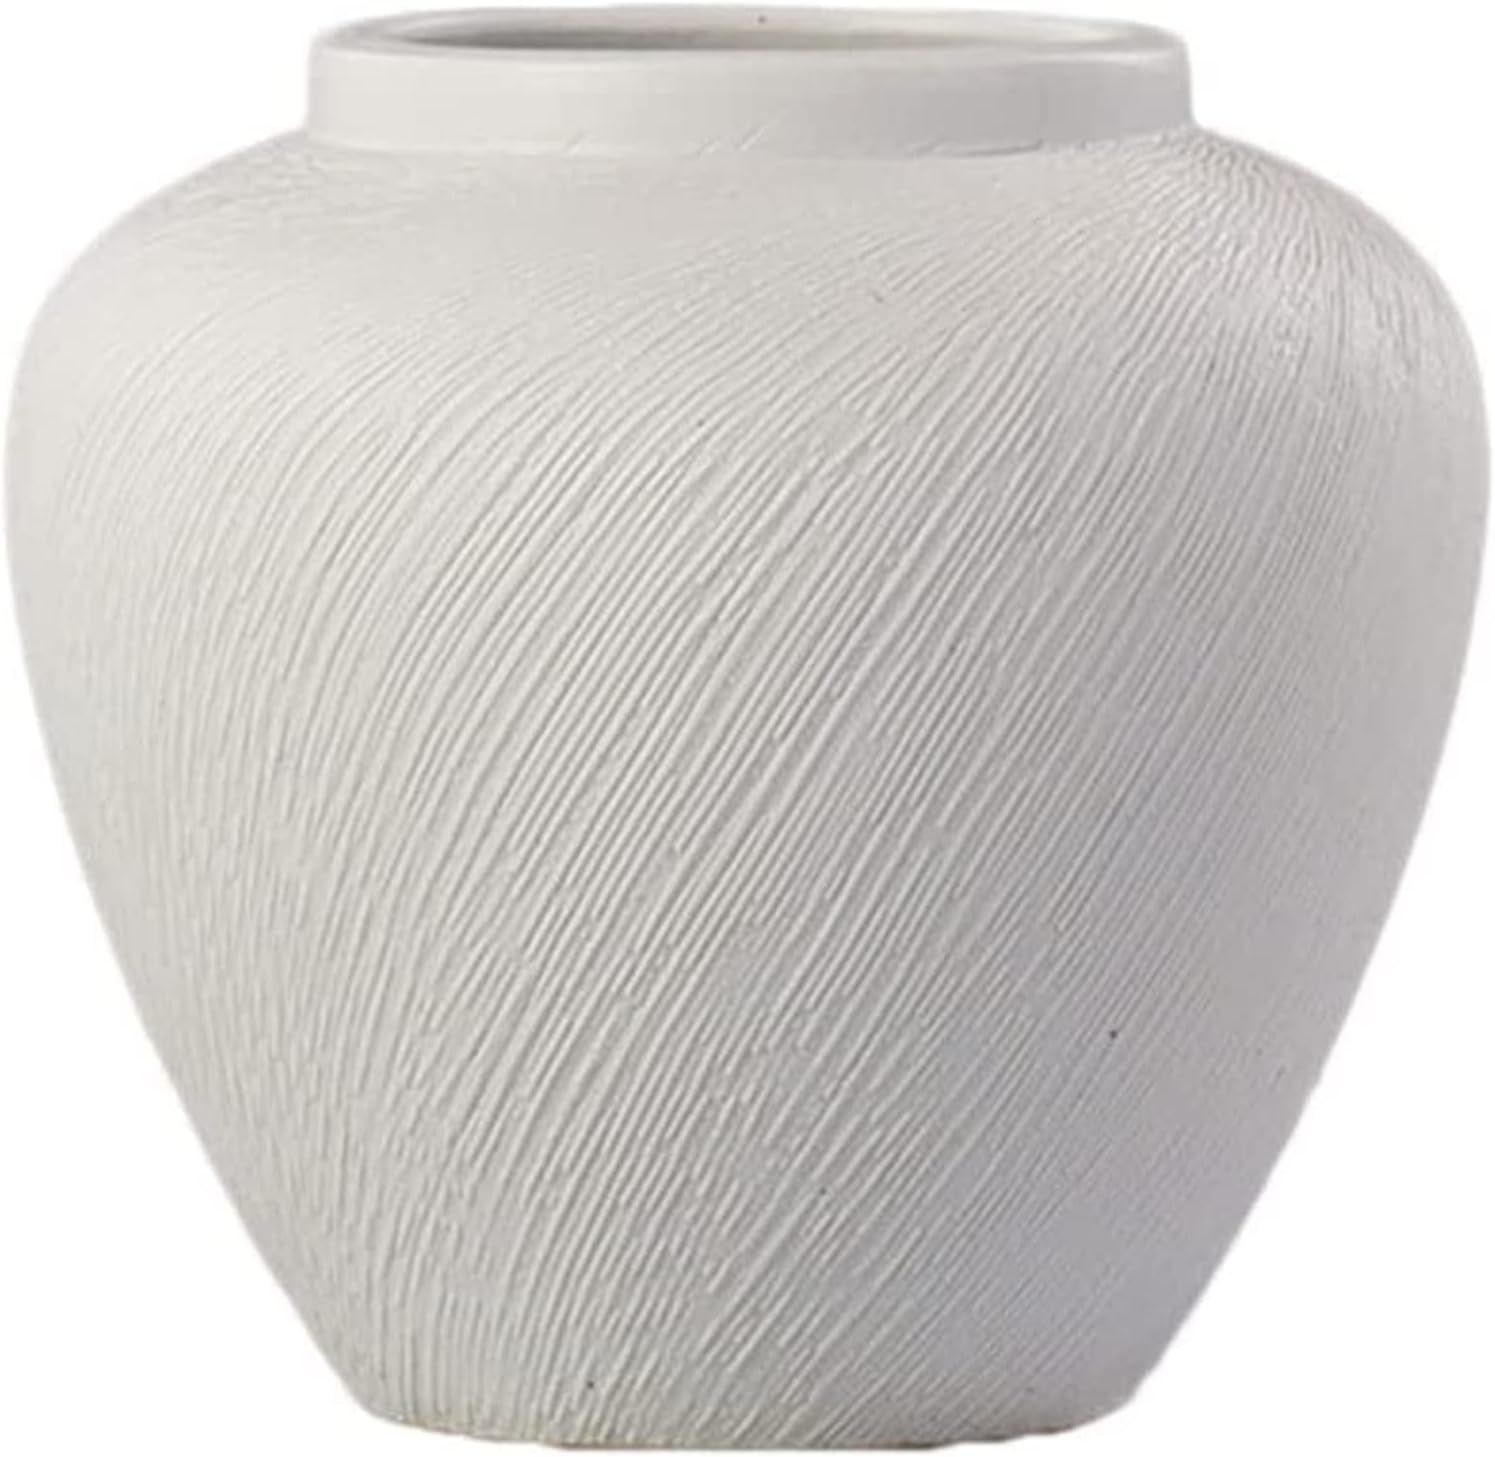 Sculpture Vase HH-CC Vase Simple/Modern Ceramic Vase Decoration Living Room Vase Crafts Crafts (C... | Amazon (US)